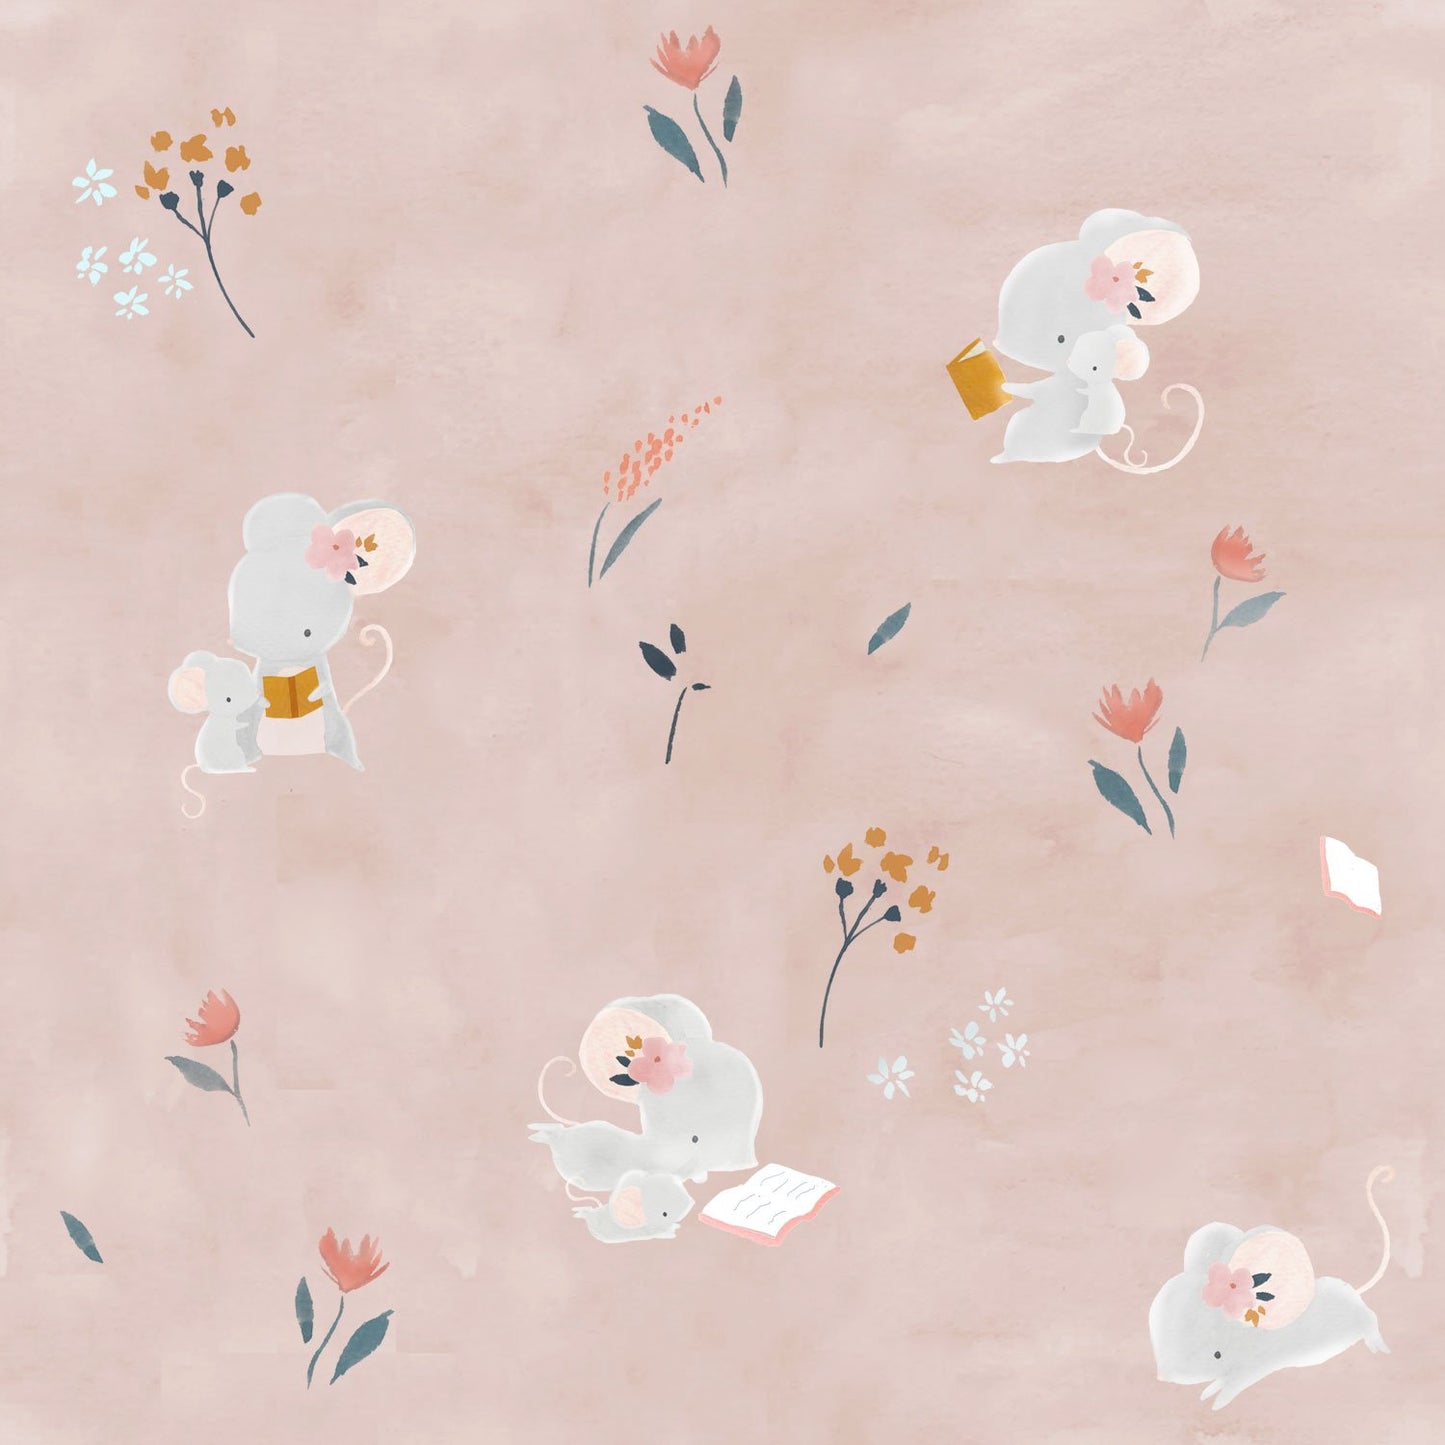 Katia Fabrics - Little Mouse and Friends - Blush